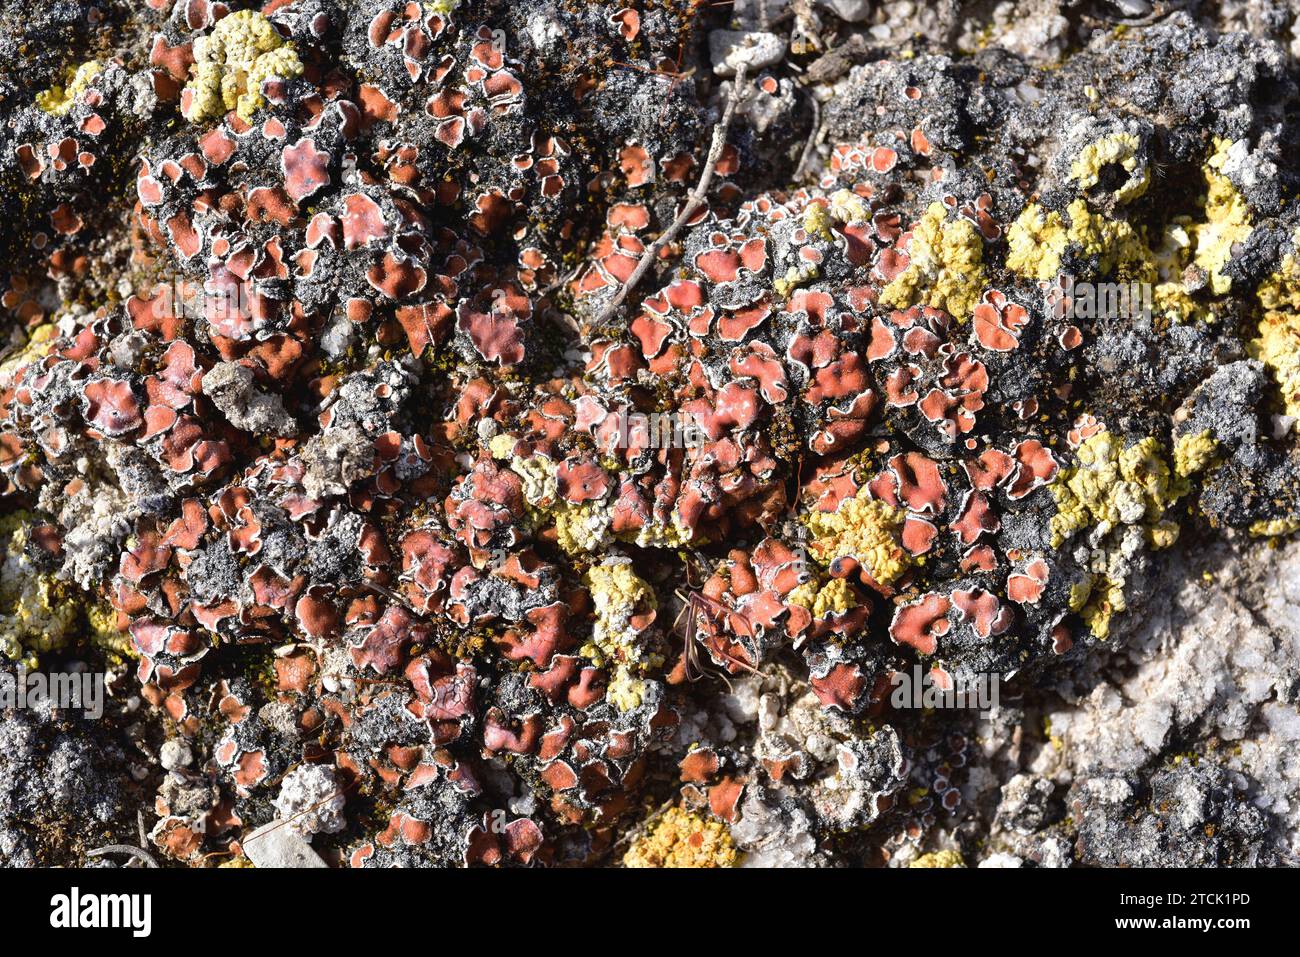 Psora decipiens squamulose brown-redish lichen and Fulgensia fulgida, yellow squamulose lichen growing on a gypsum soil. This photo was taken in Bellm Stock Photo